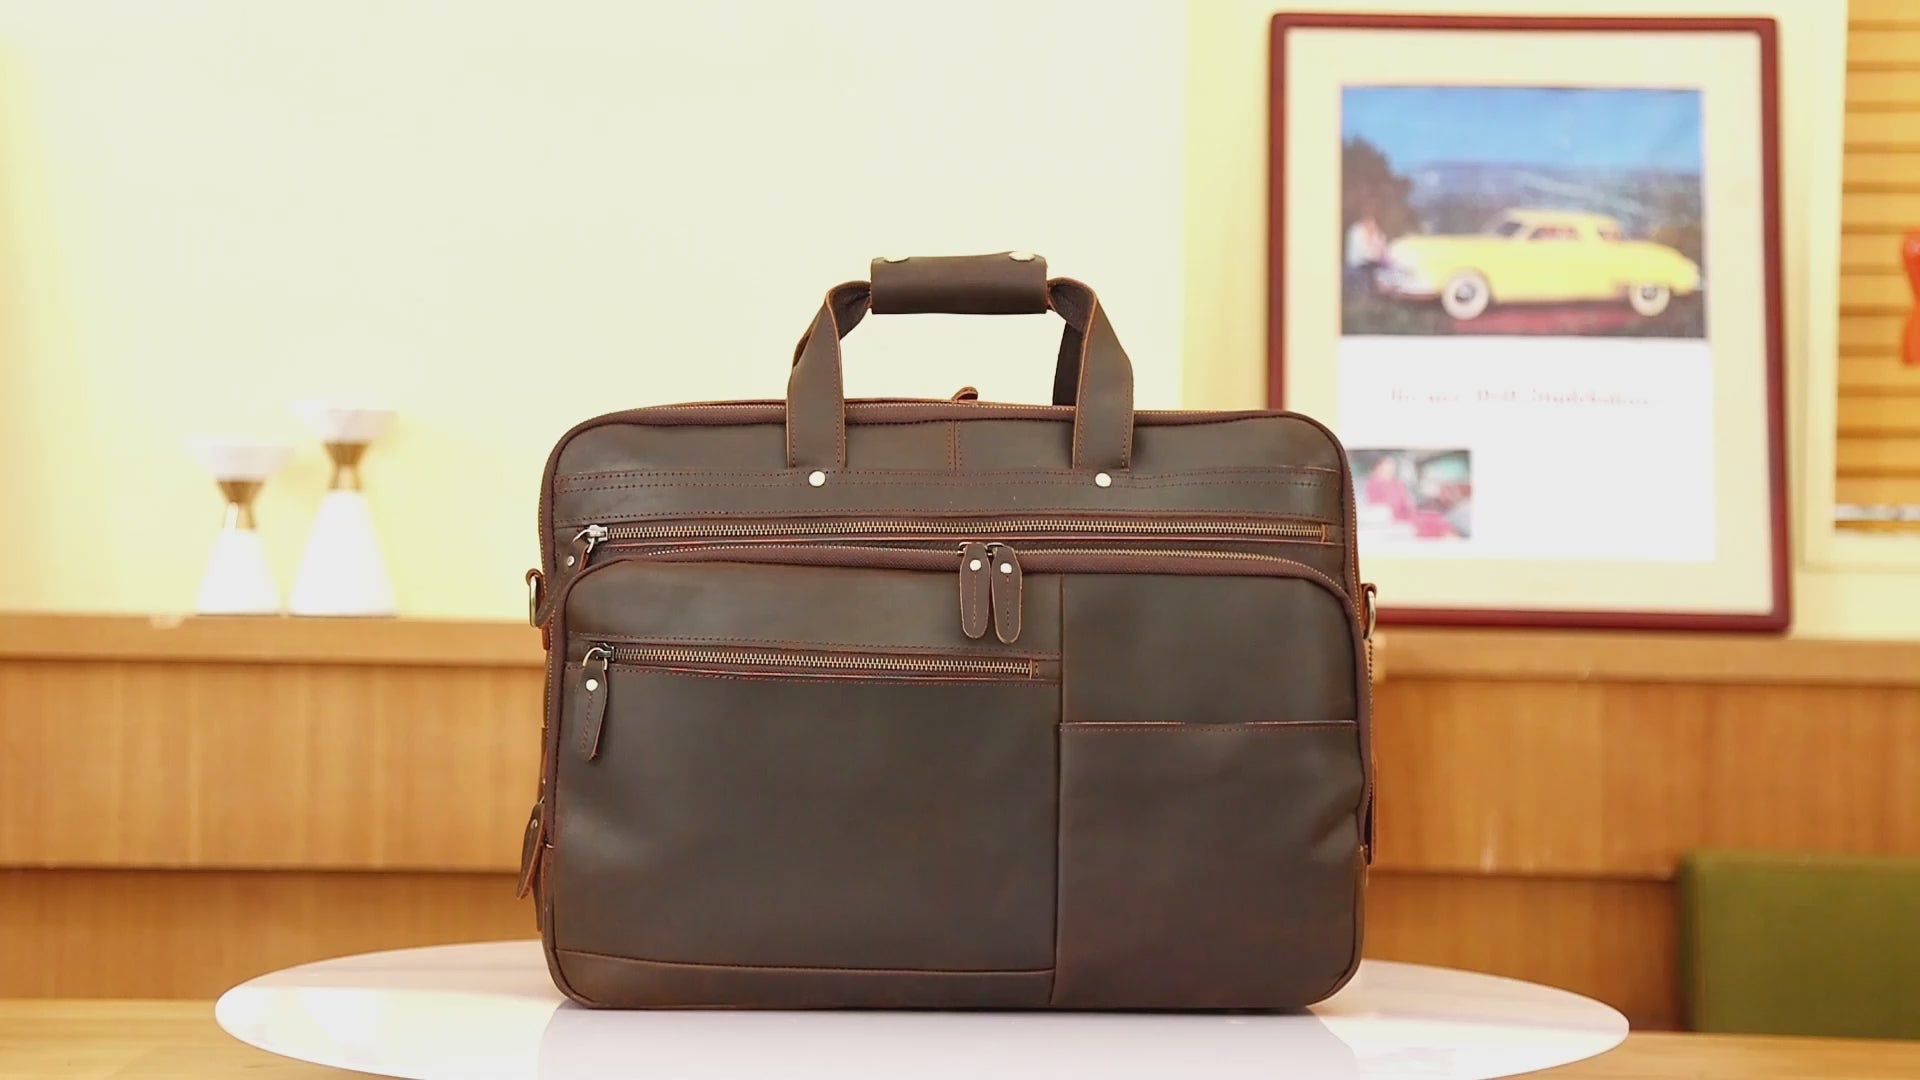 Polare Full Grain Leather 16.5'' Laptop Bag Briefcase for Men Business